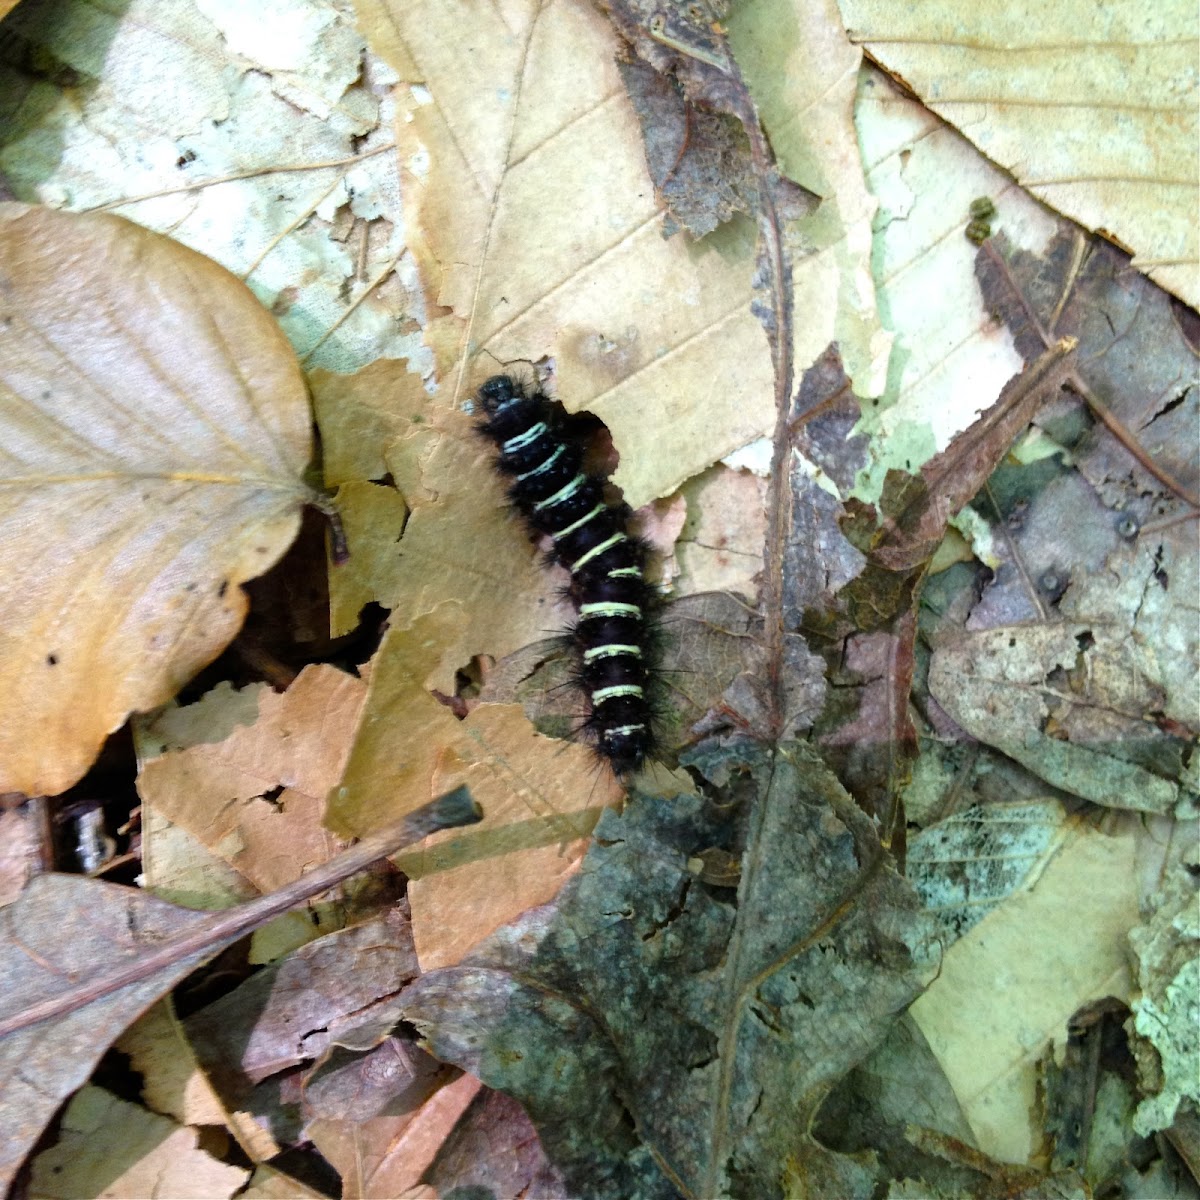 Agreeable tiger moth caterpillar